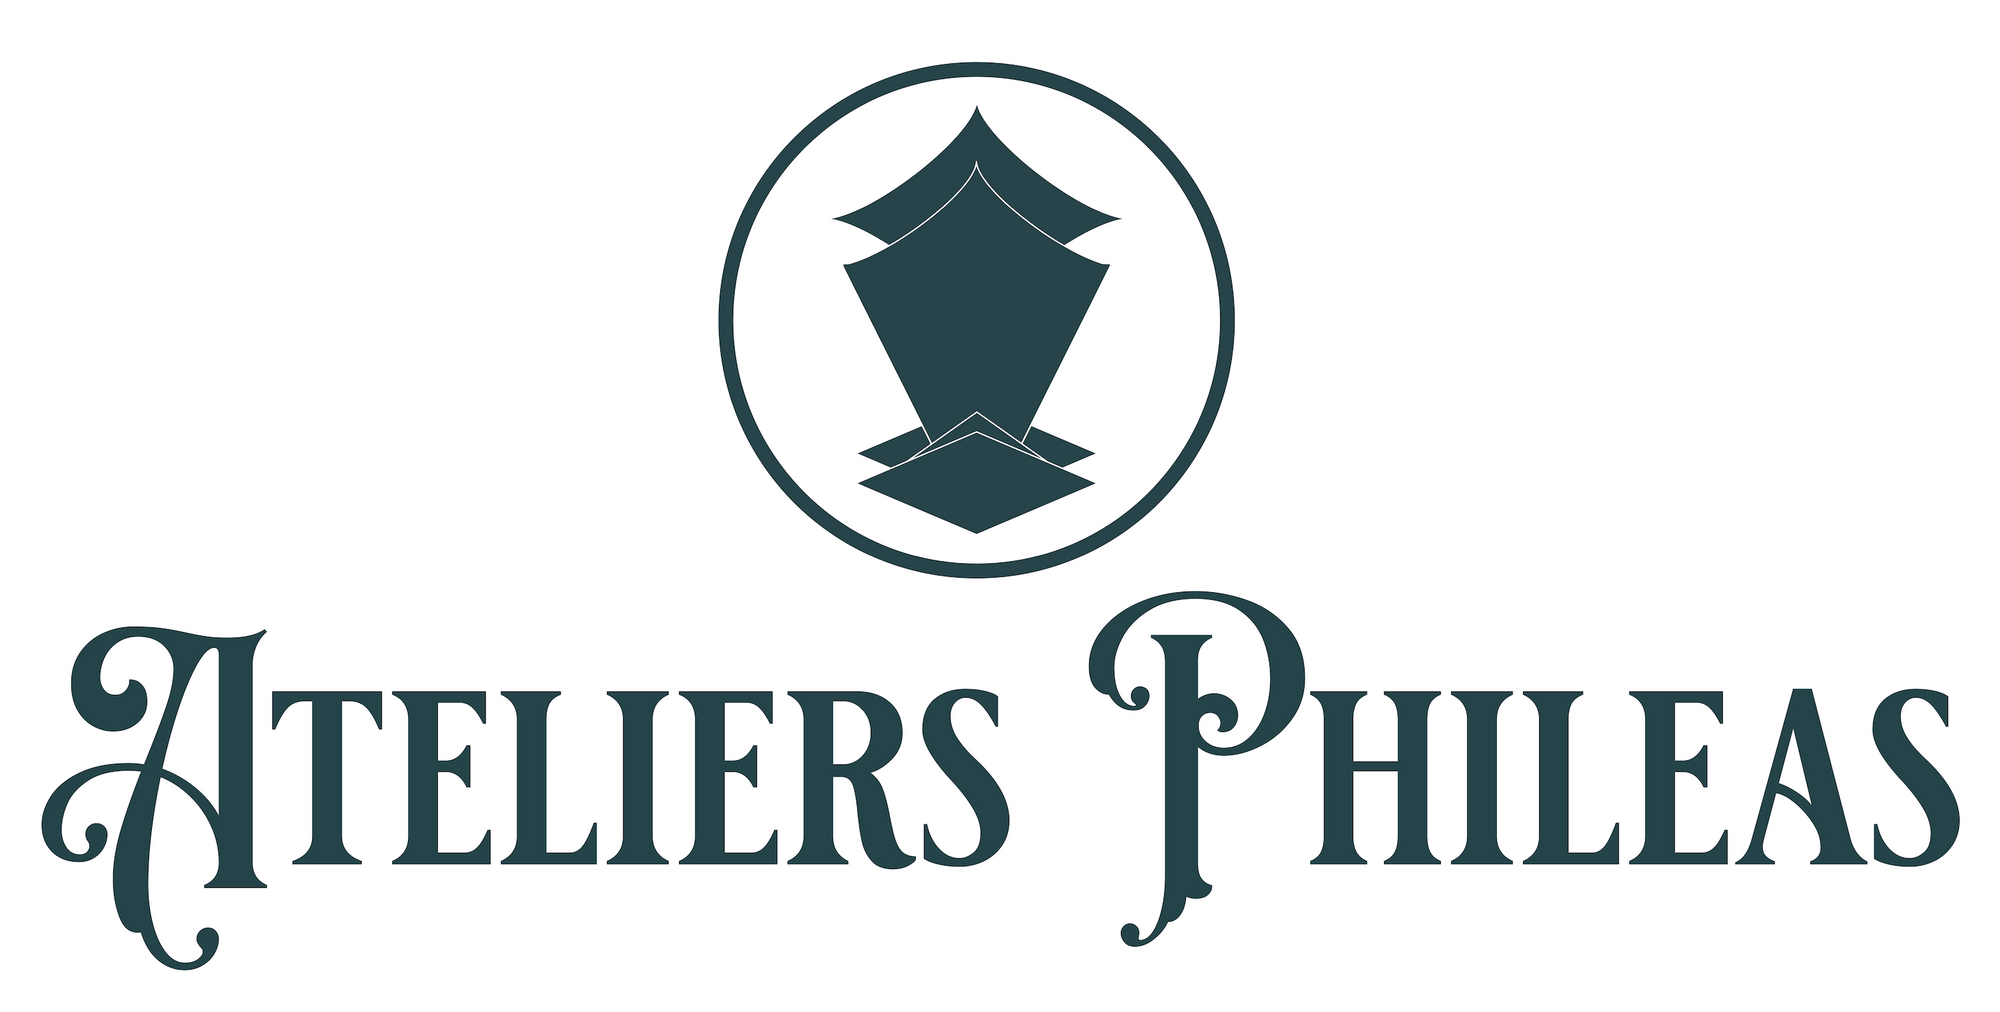 Ateliers Phileas